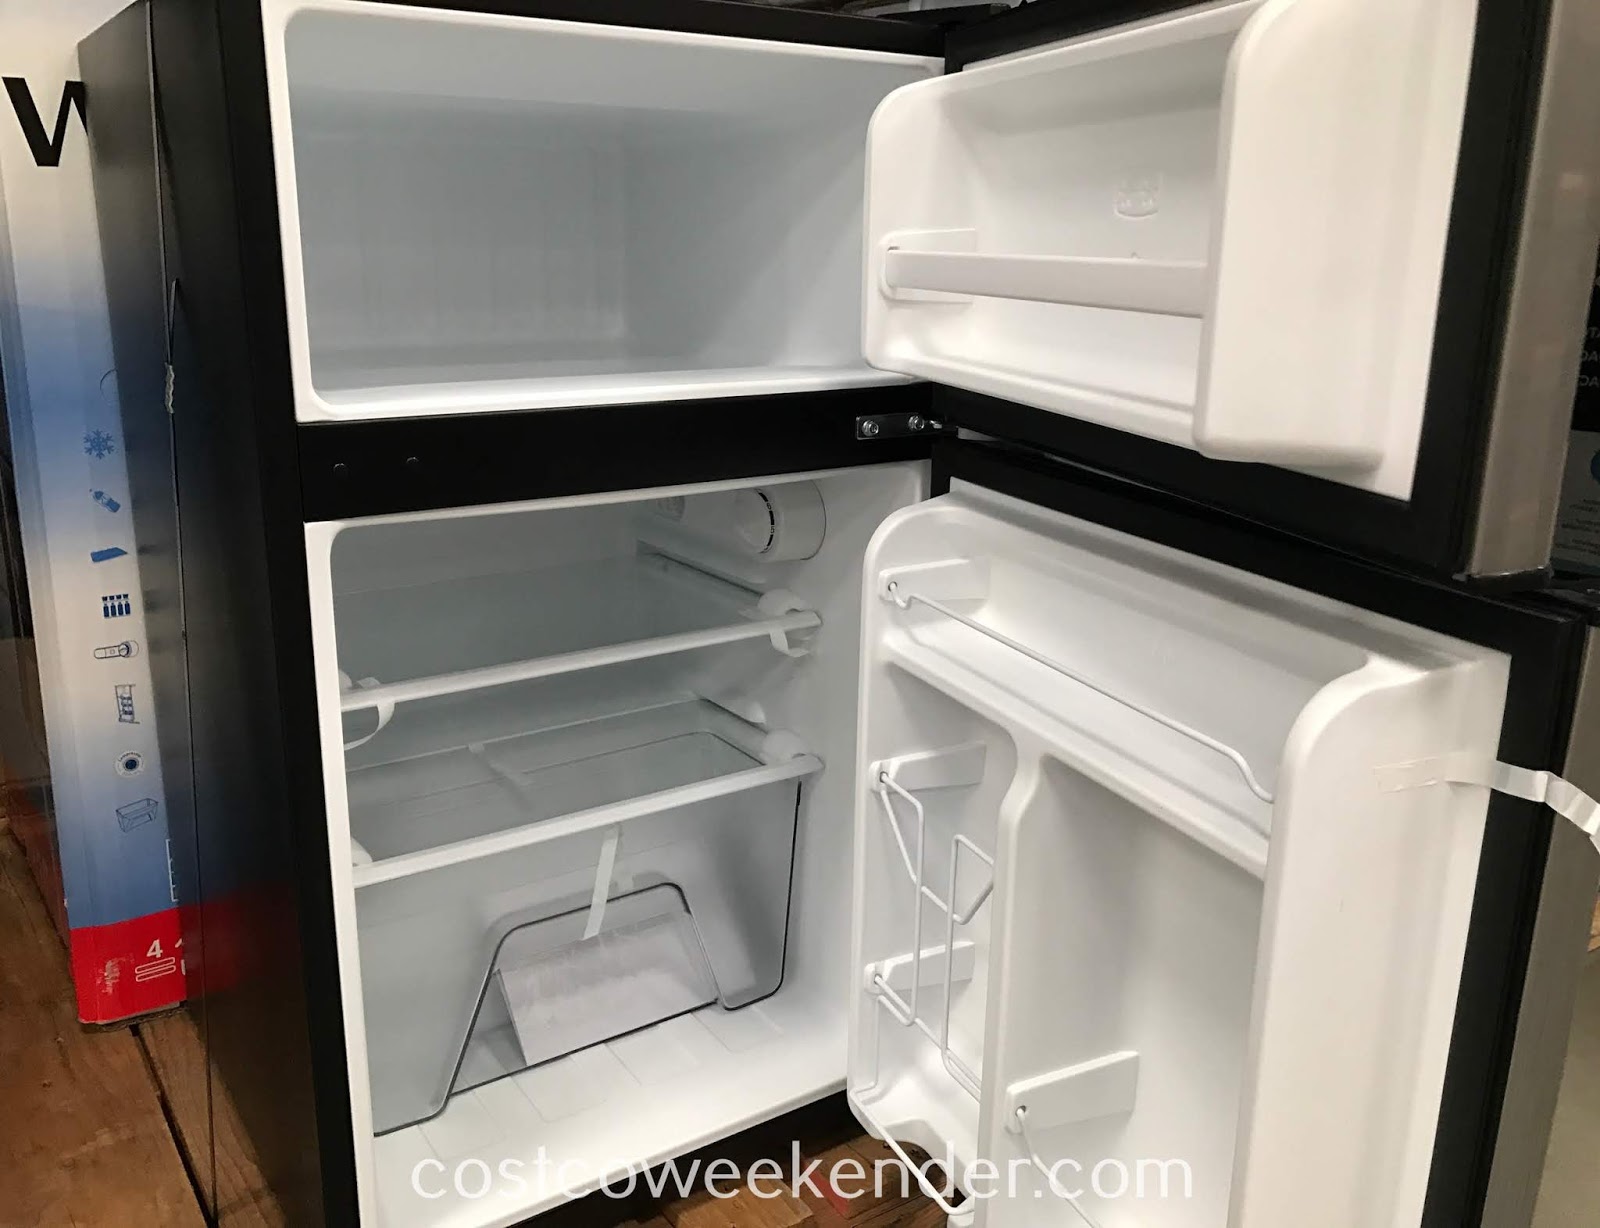 24+ Costco mini fridge no freezer info